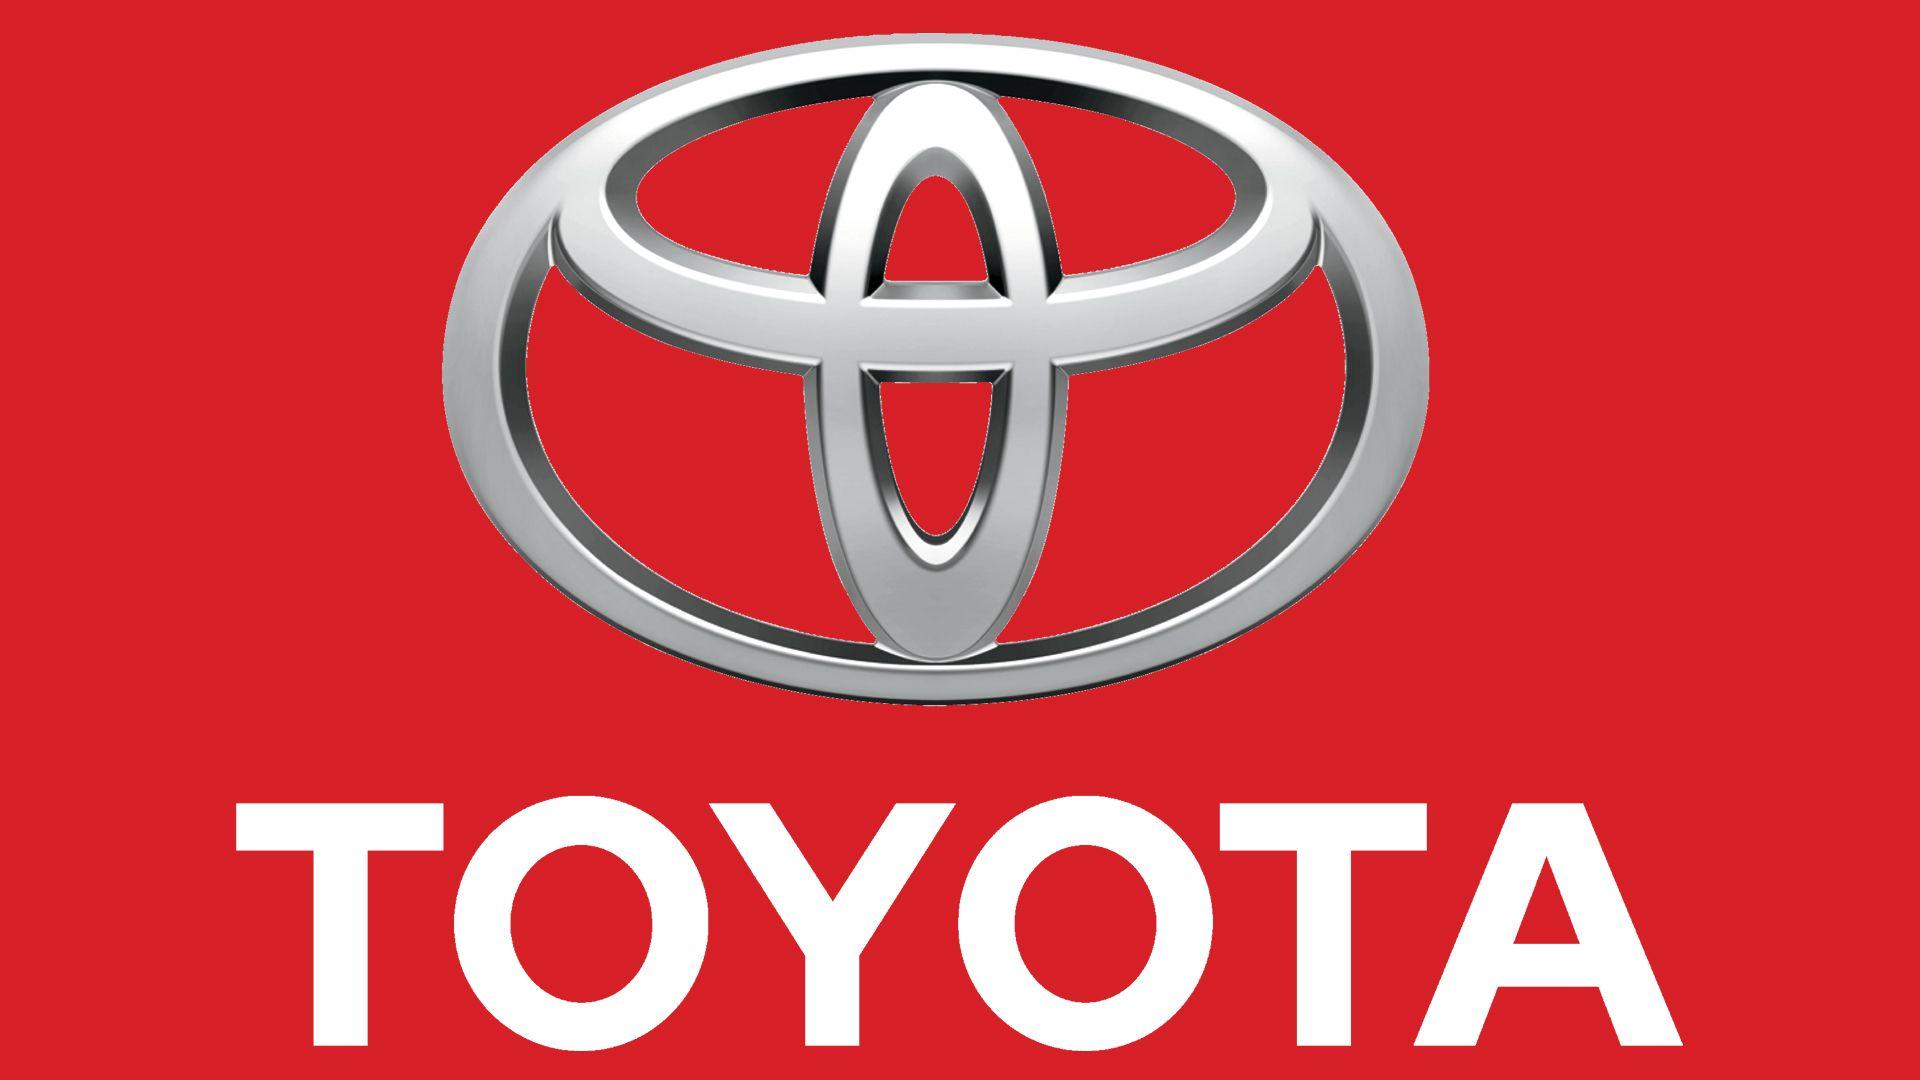 Toyota Logo - Toyota Logo, Toyota Symbol, Meaning, History and Evolution